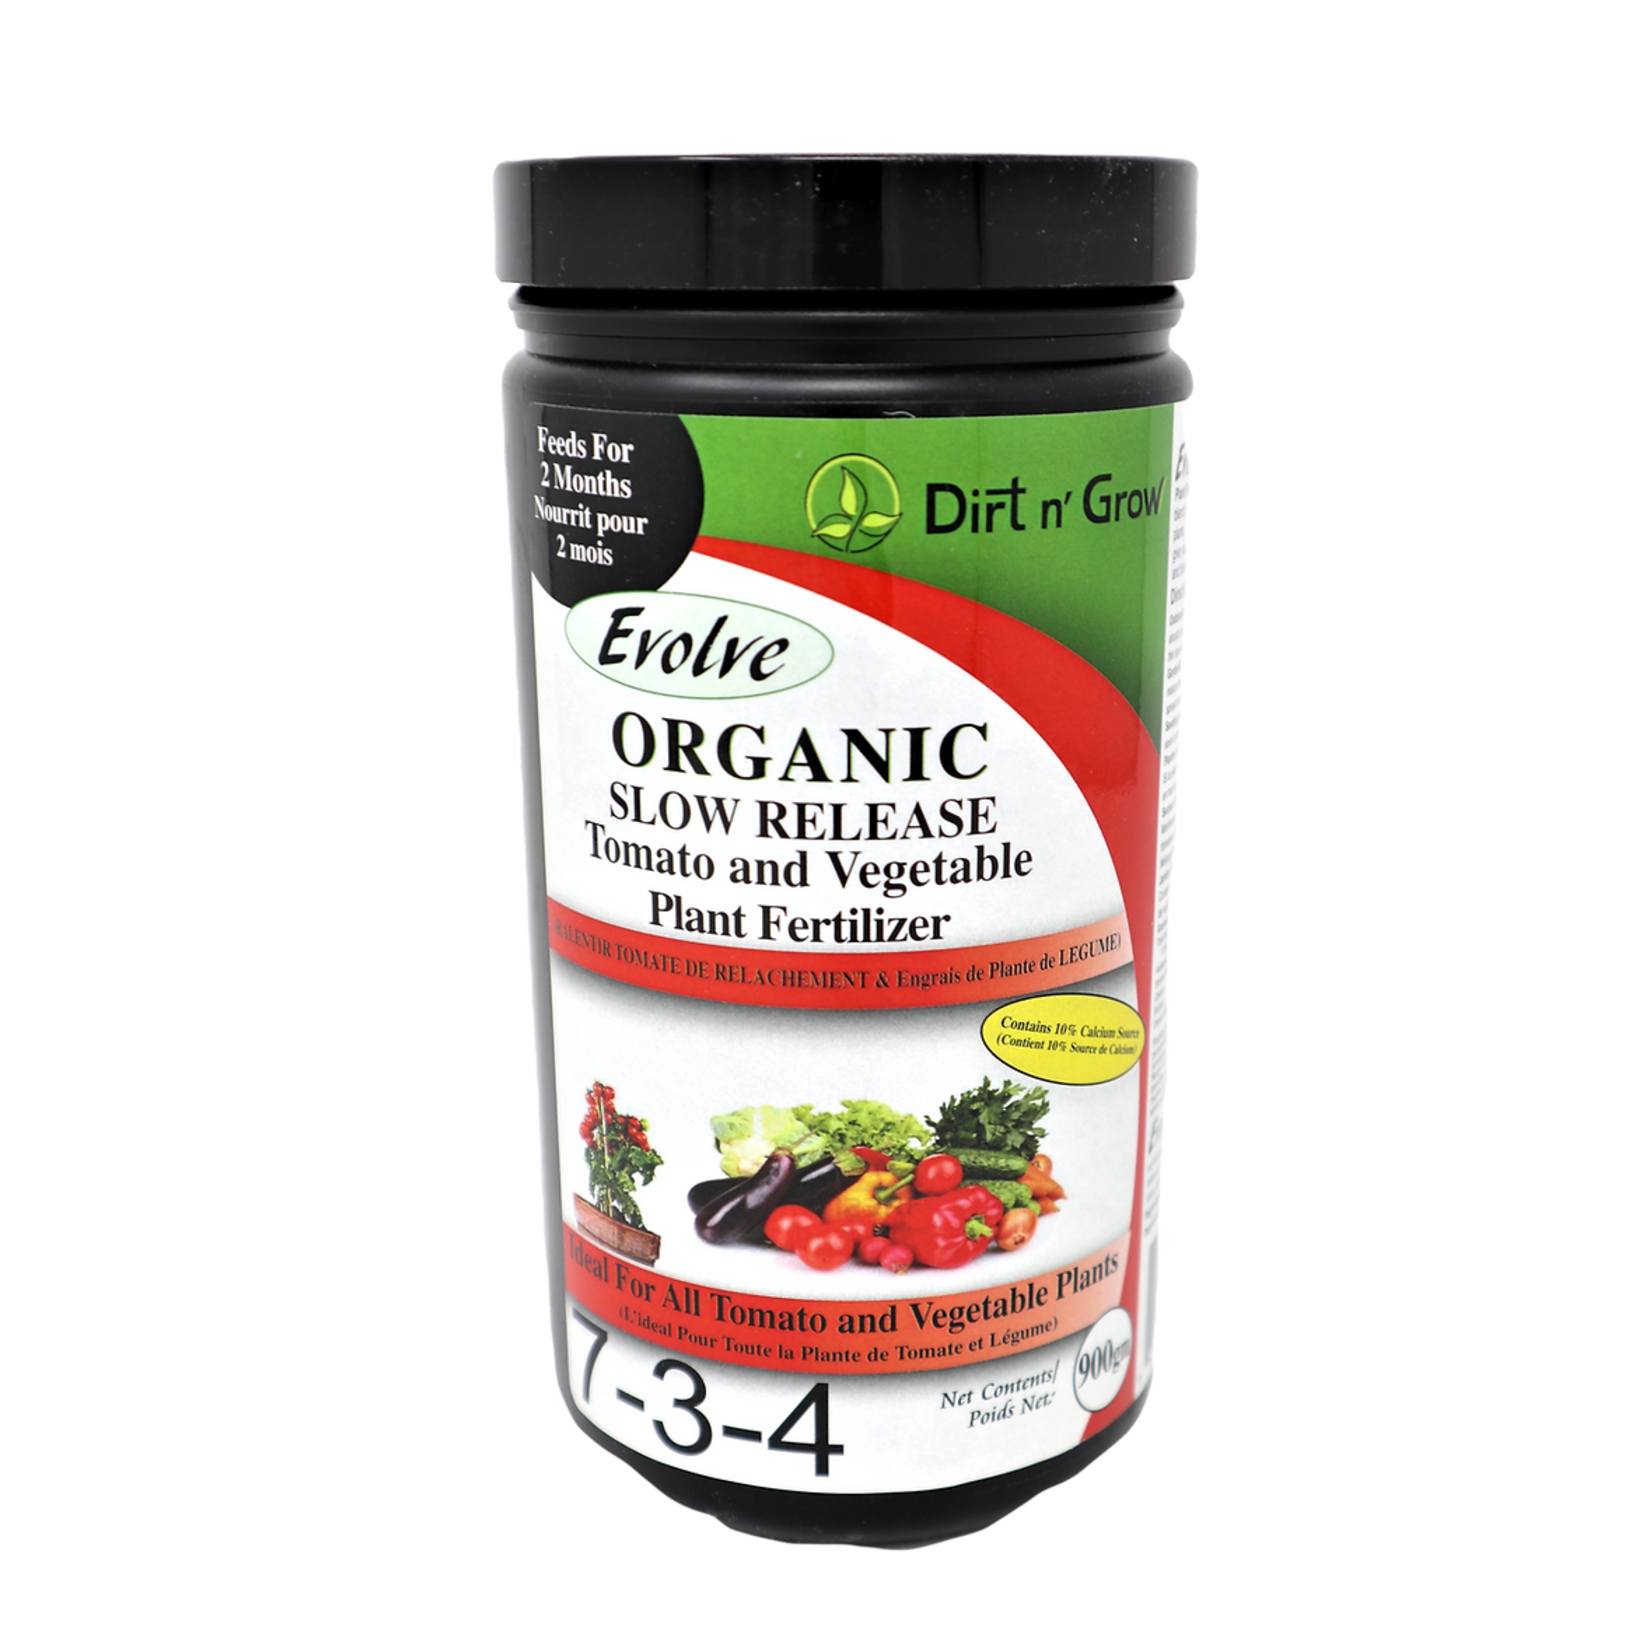 Evolve Organic Fertilizers Slow Release Tomato & Vegetable 7-3-4